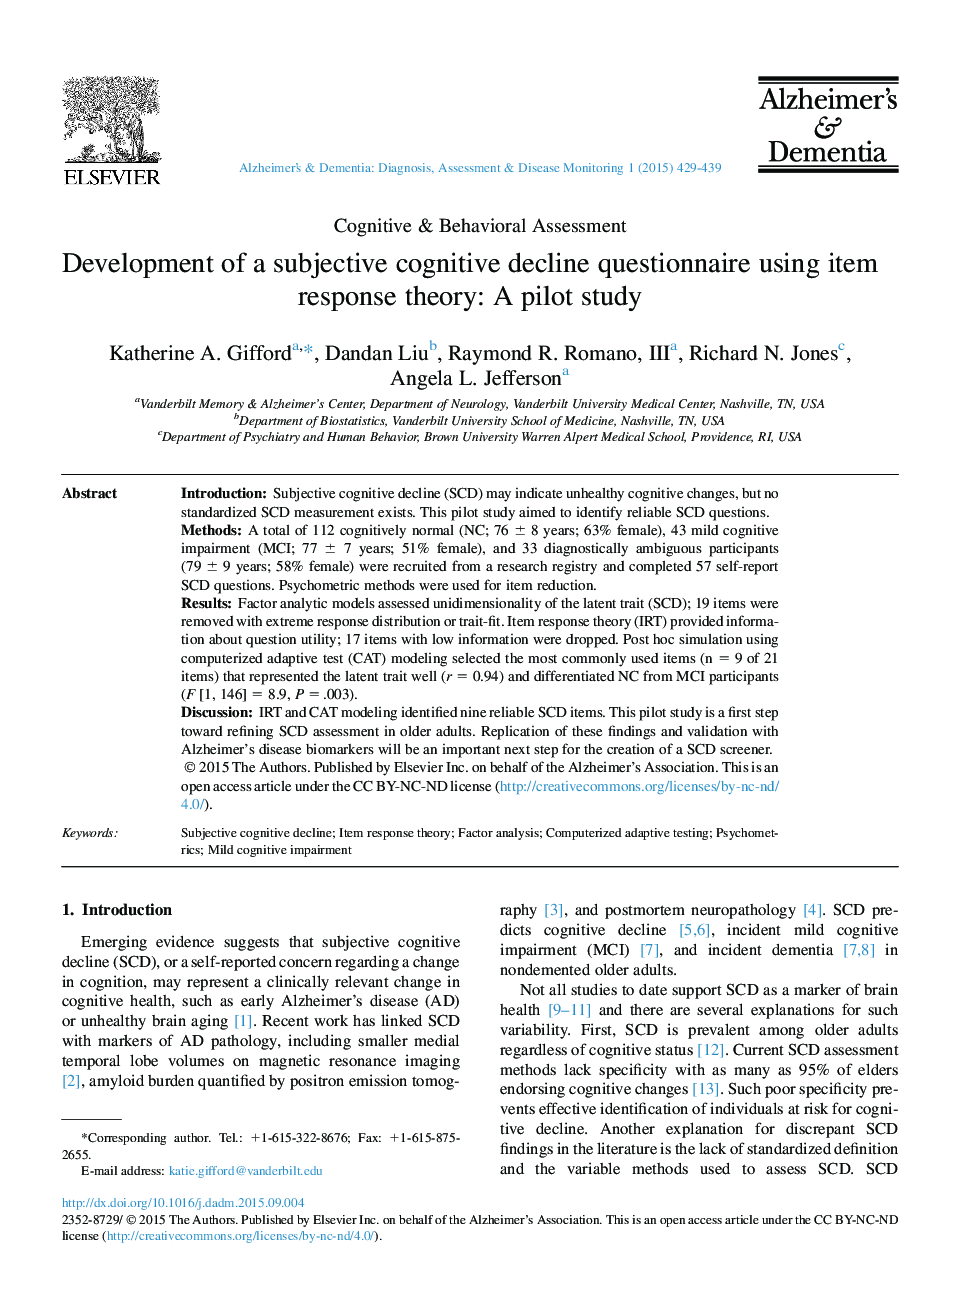 Development of a subjective cognitive decline questionnaire using item response theory: A pilot study